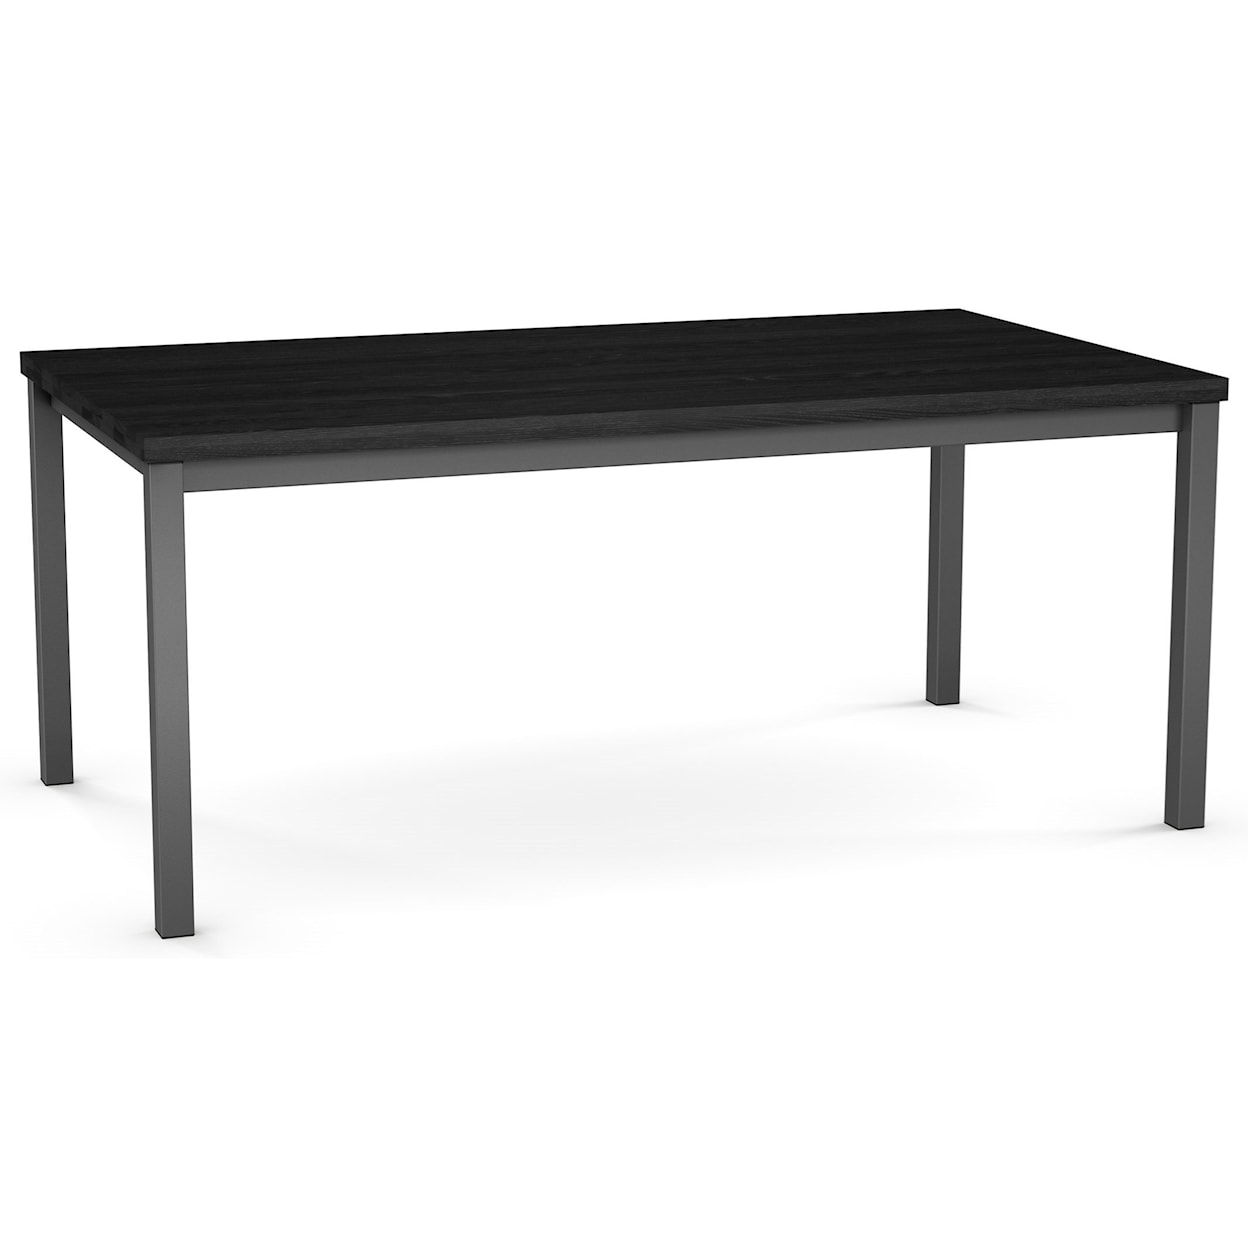 Amisco Urban Bennington Table with Wood Top